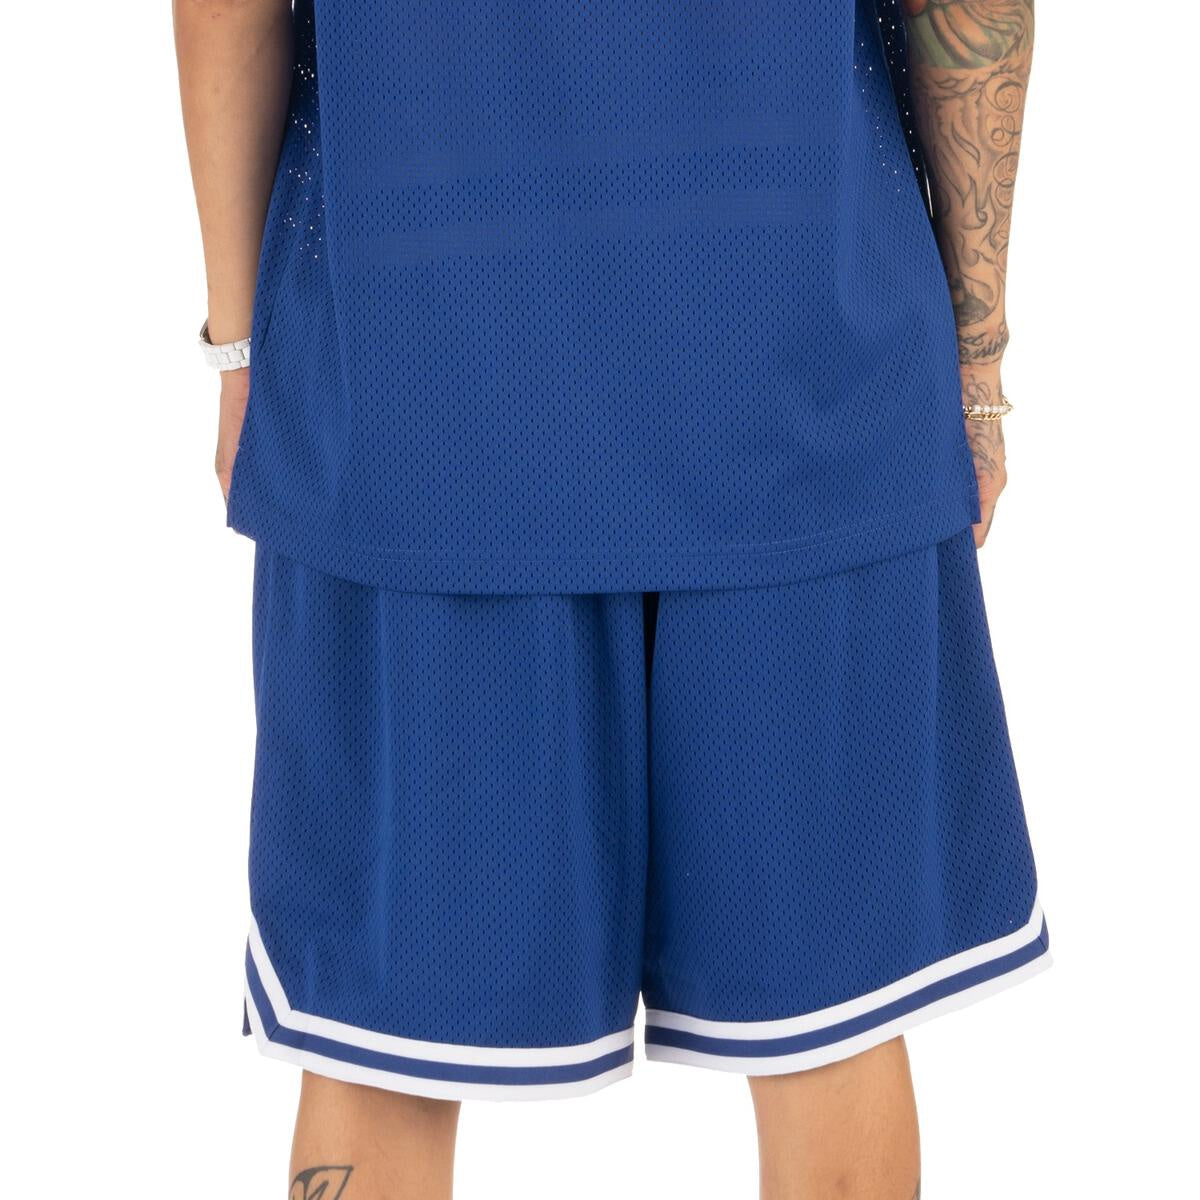 Pro Club  Classic Basketball Shorts - Royal Blue